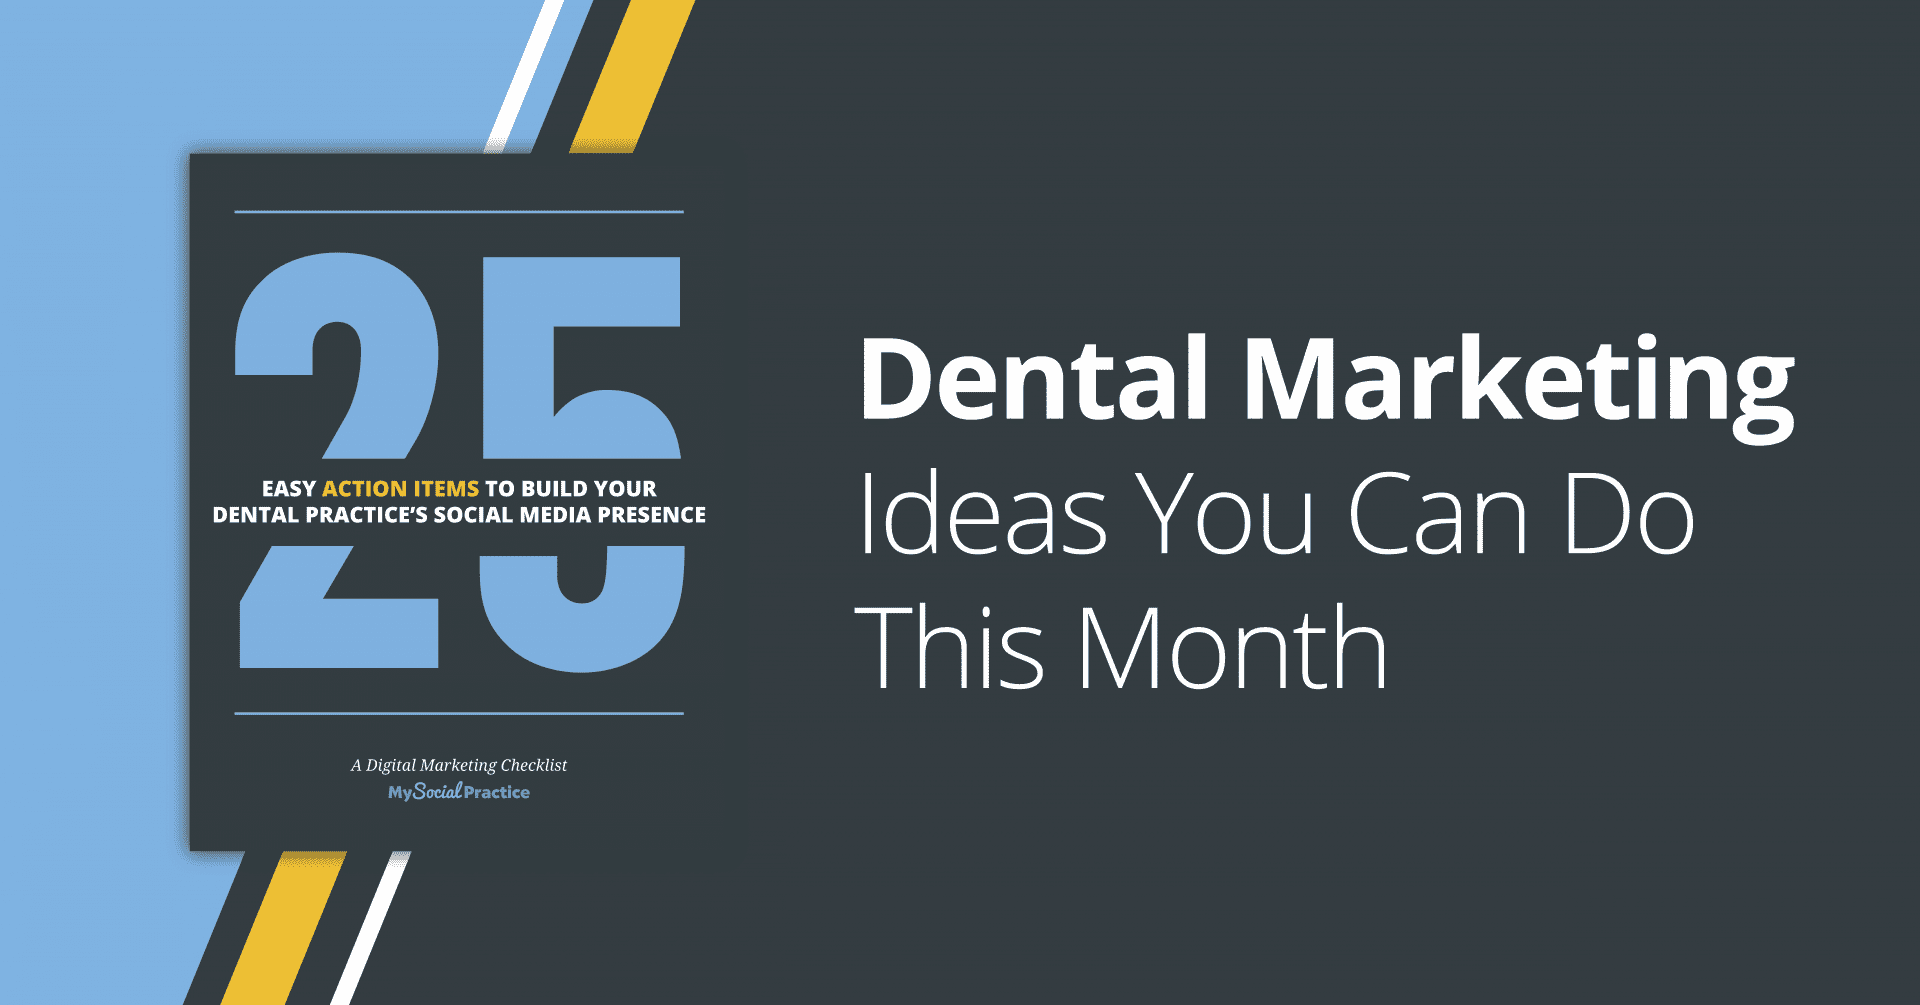 My Social Practice - Social Media Marketing for Dental & Dental Specialty Practices - dental marketing